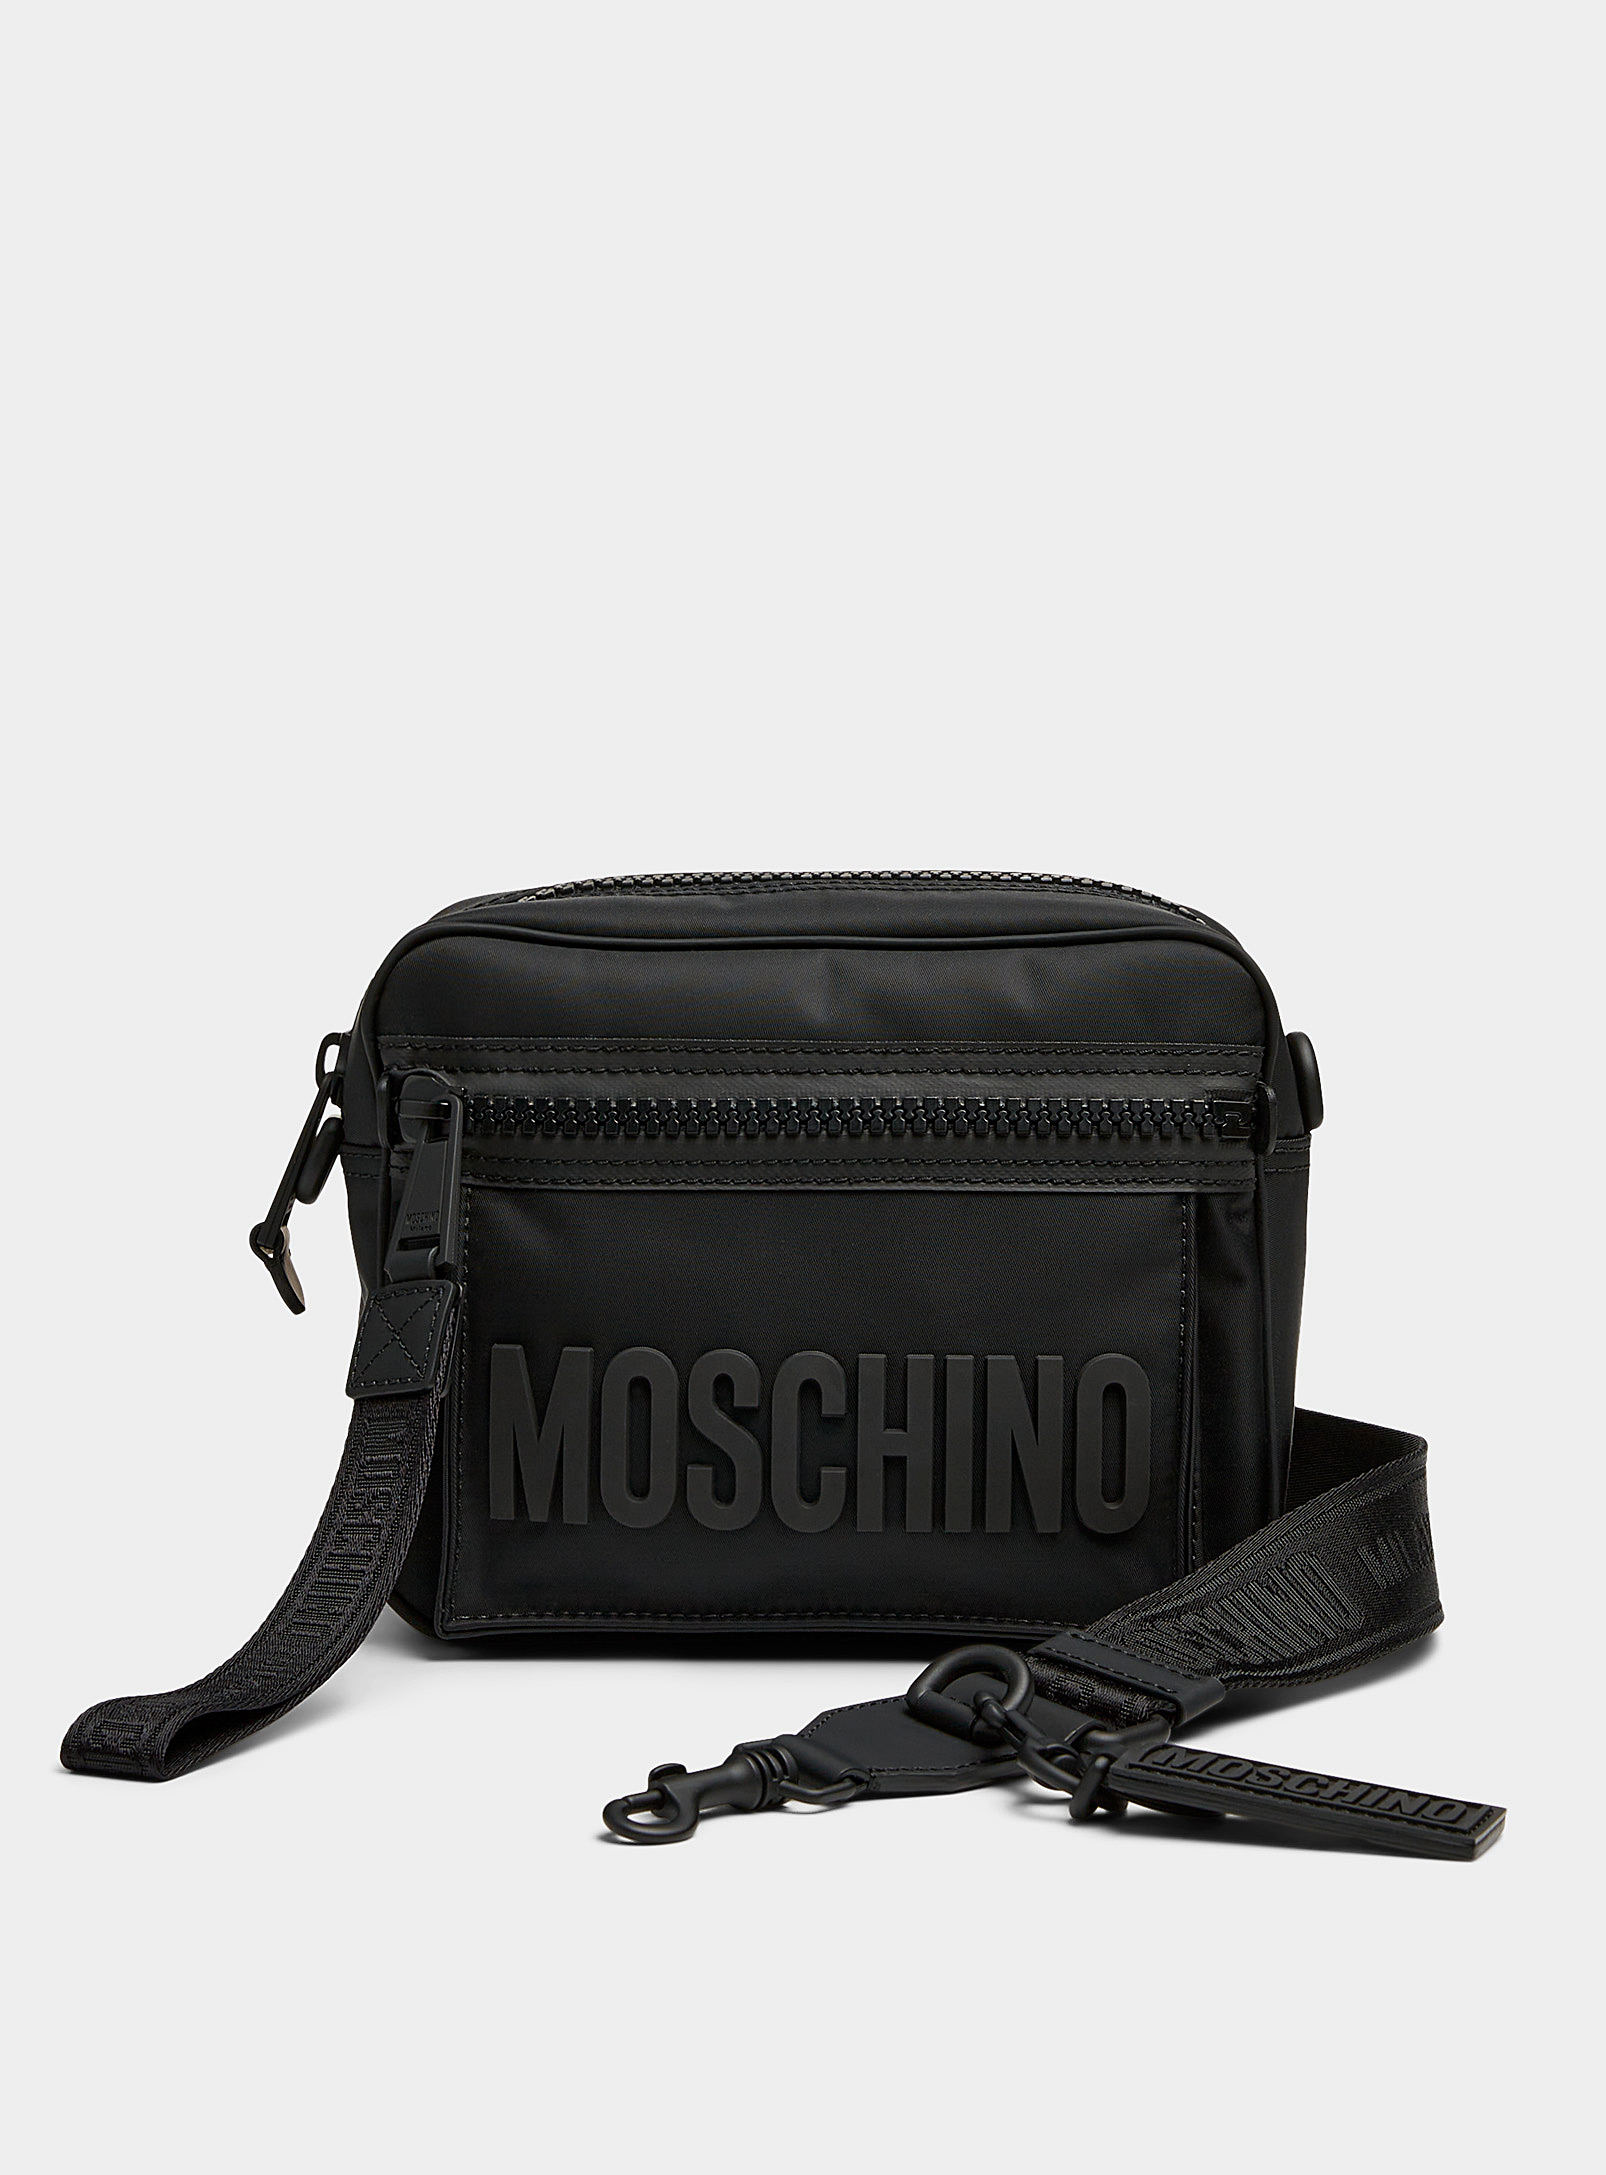 Moschino - Le sac bandoulière signature relief